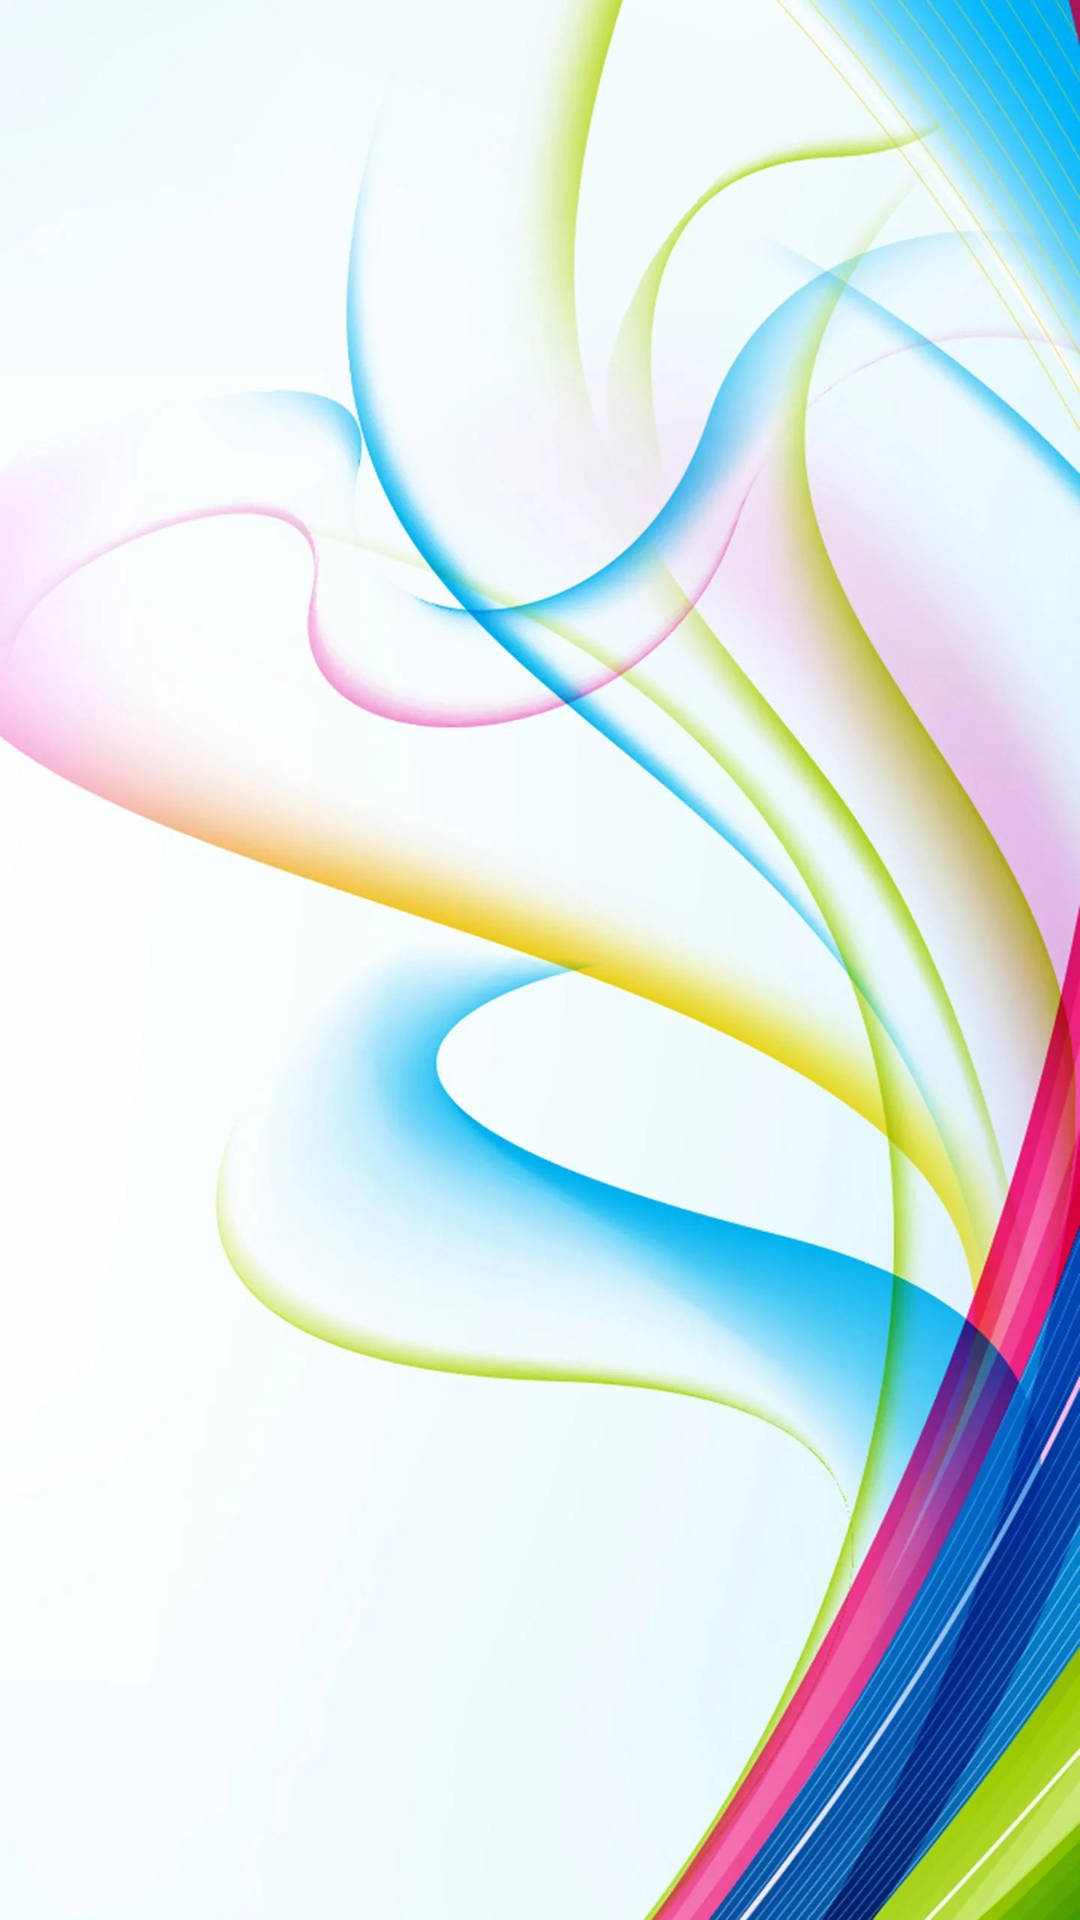 Panasonic Colorful Abstract Wallpaper